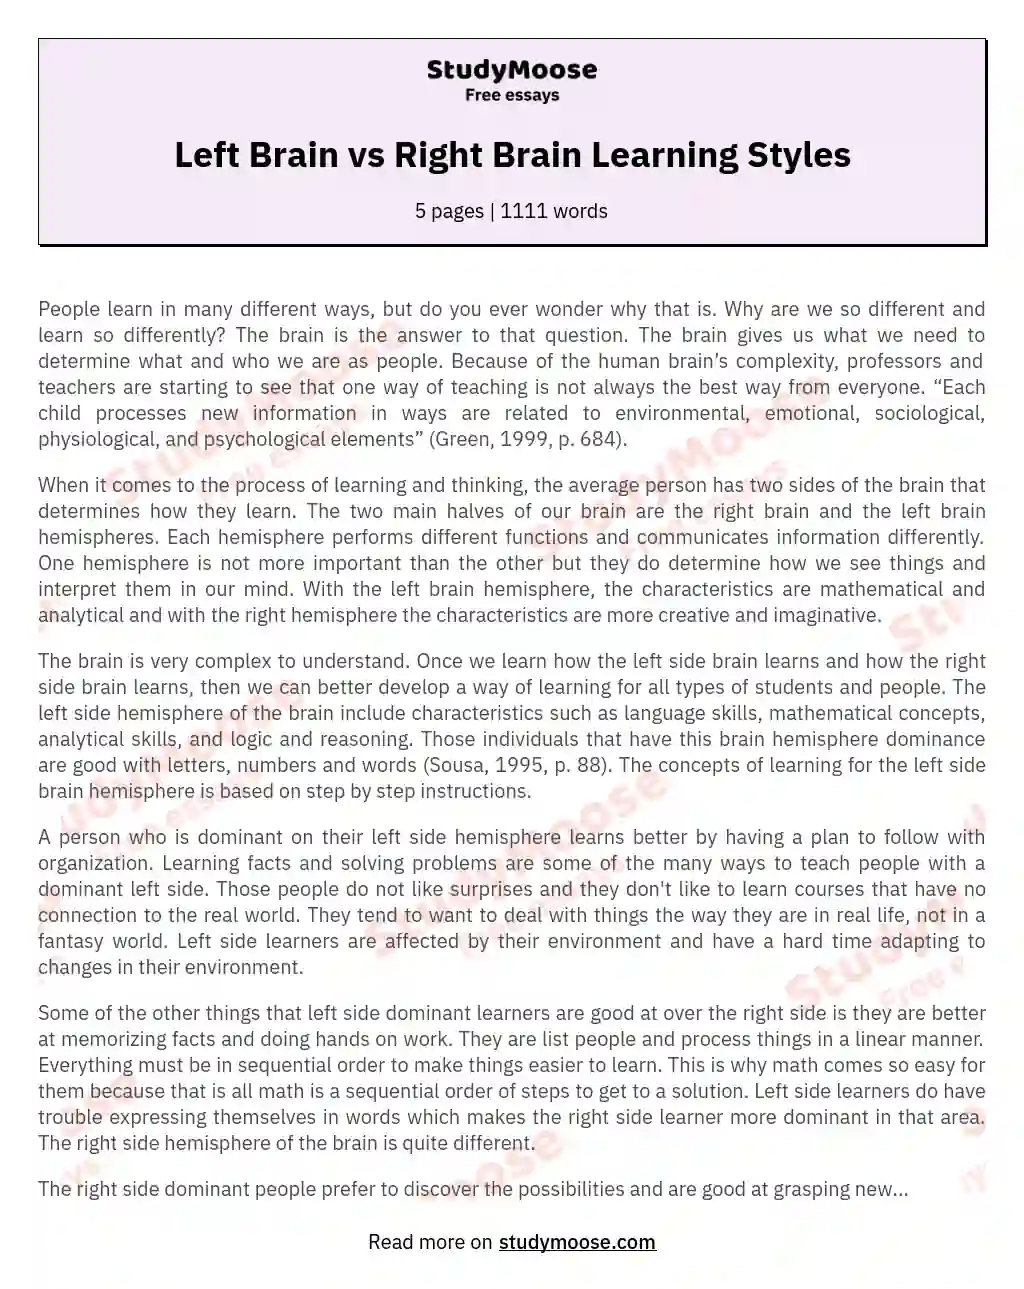 Left Brain vs Right Brain Learning Styles essay